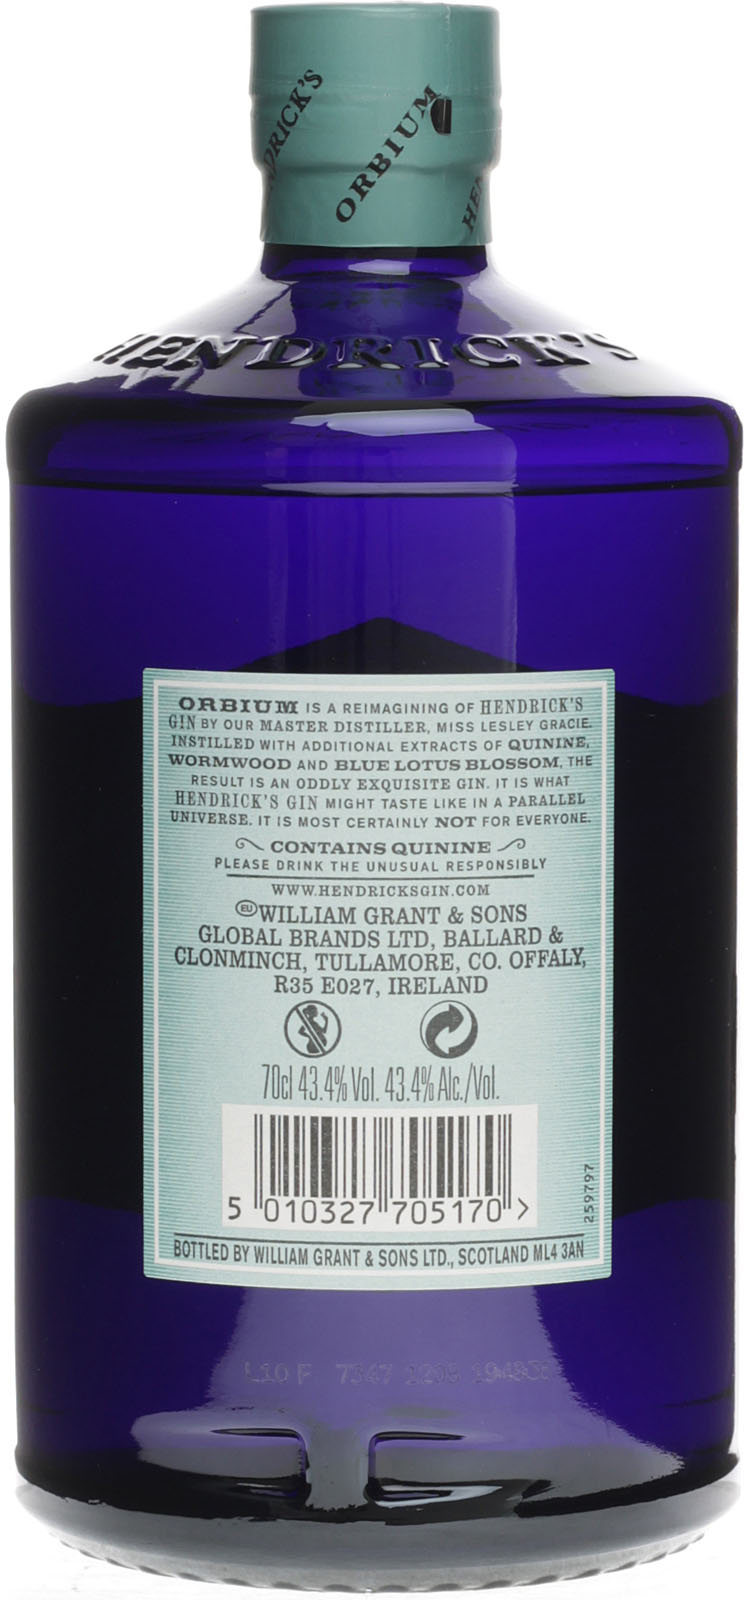 Hendrick's Orbium Gin Limited Release 0,7L - 43,4% Vol.